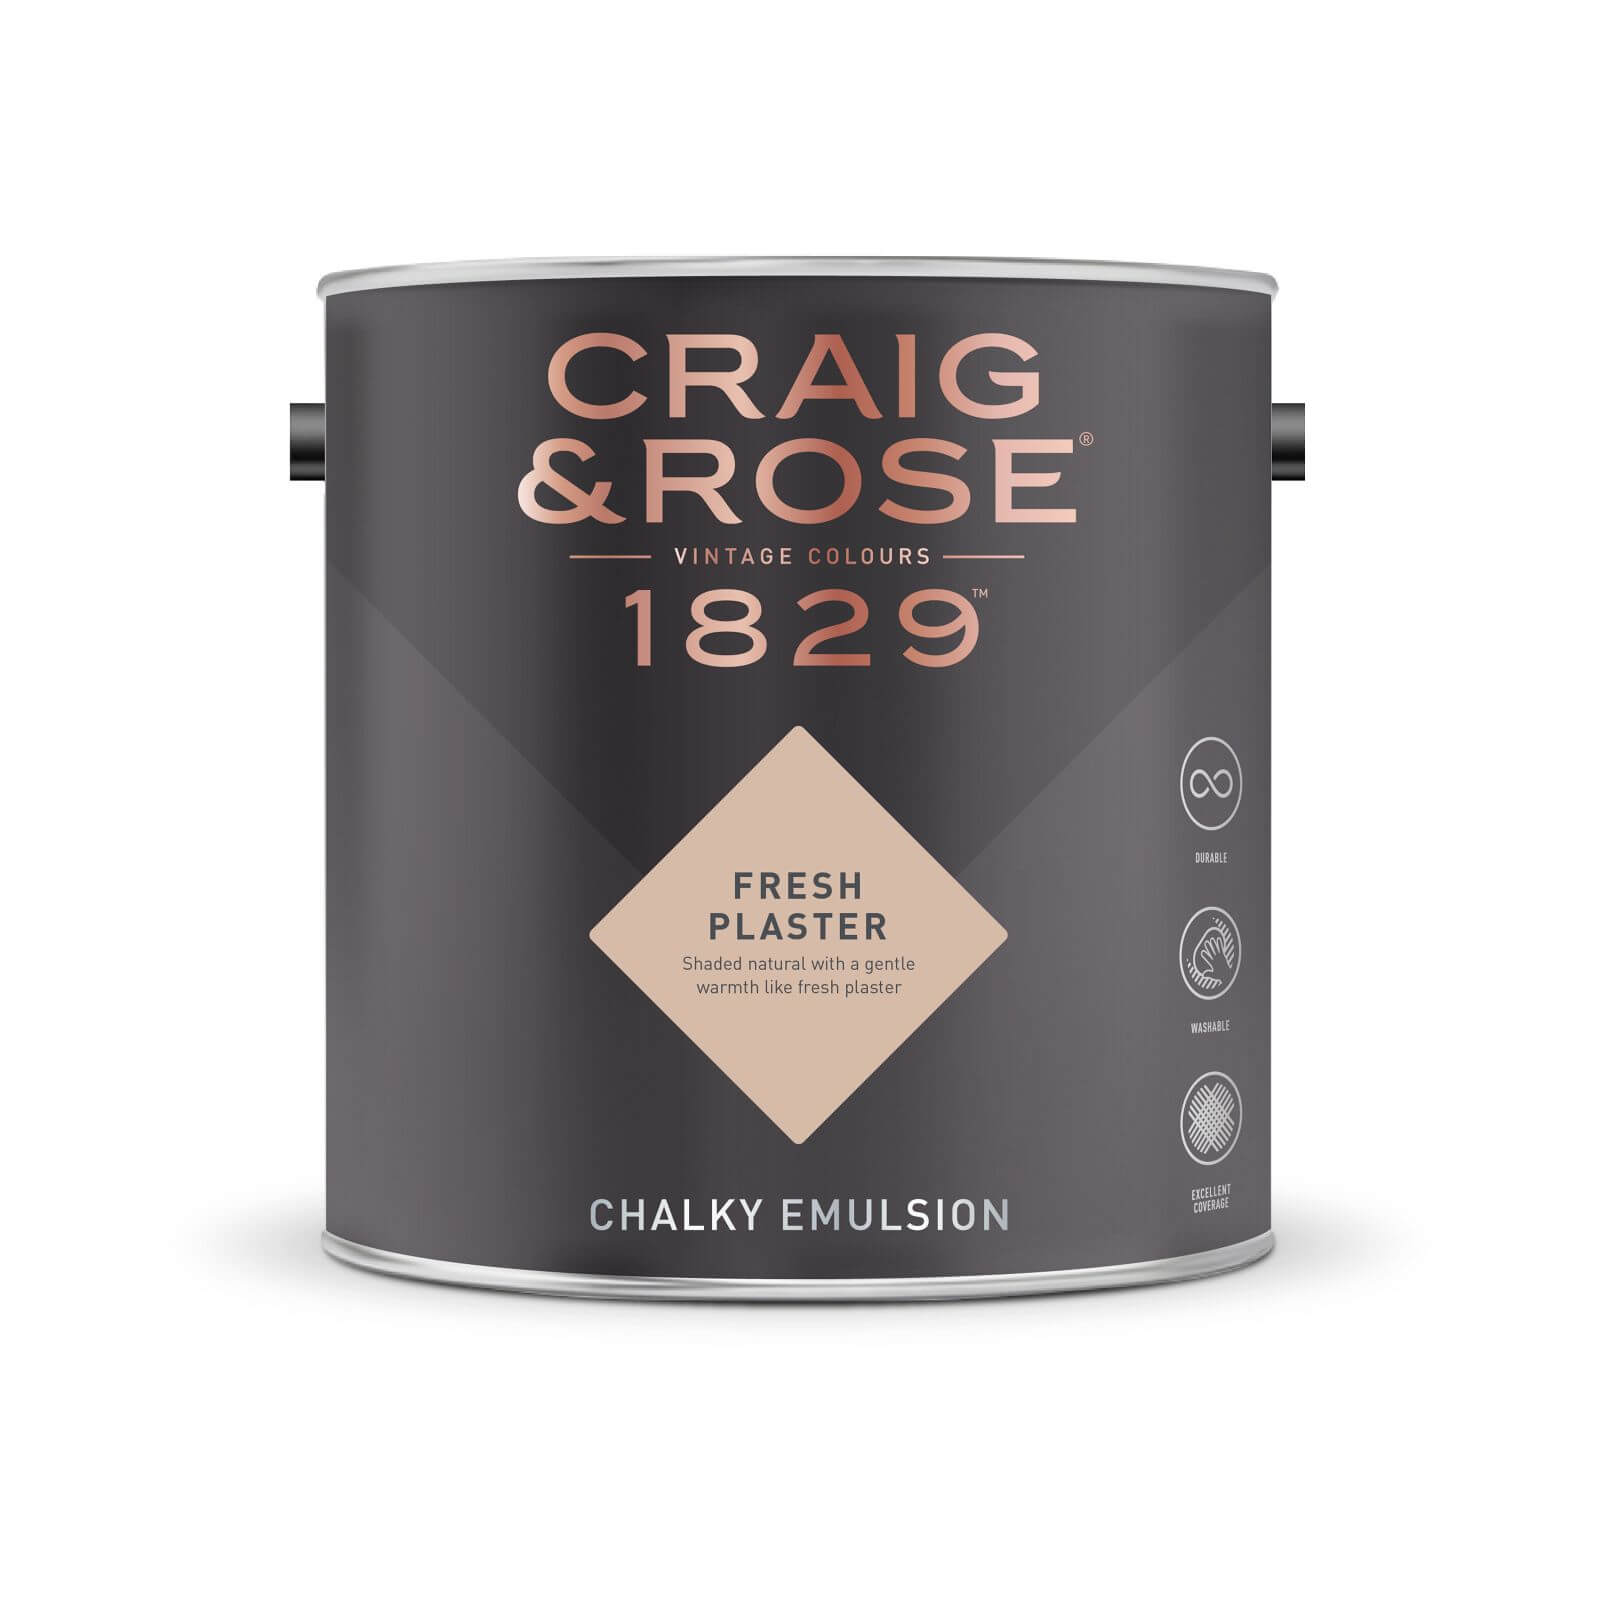 Craig & Rose 1829 Chalky Emulsion Paint Fresh Plaster - 5L